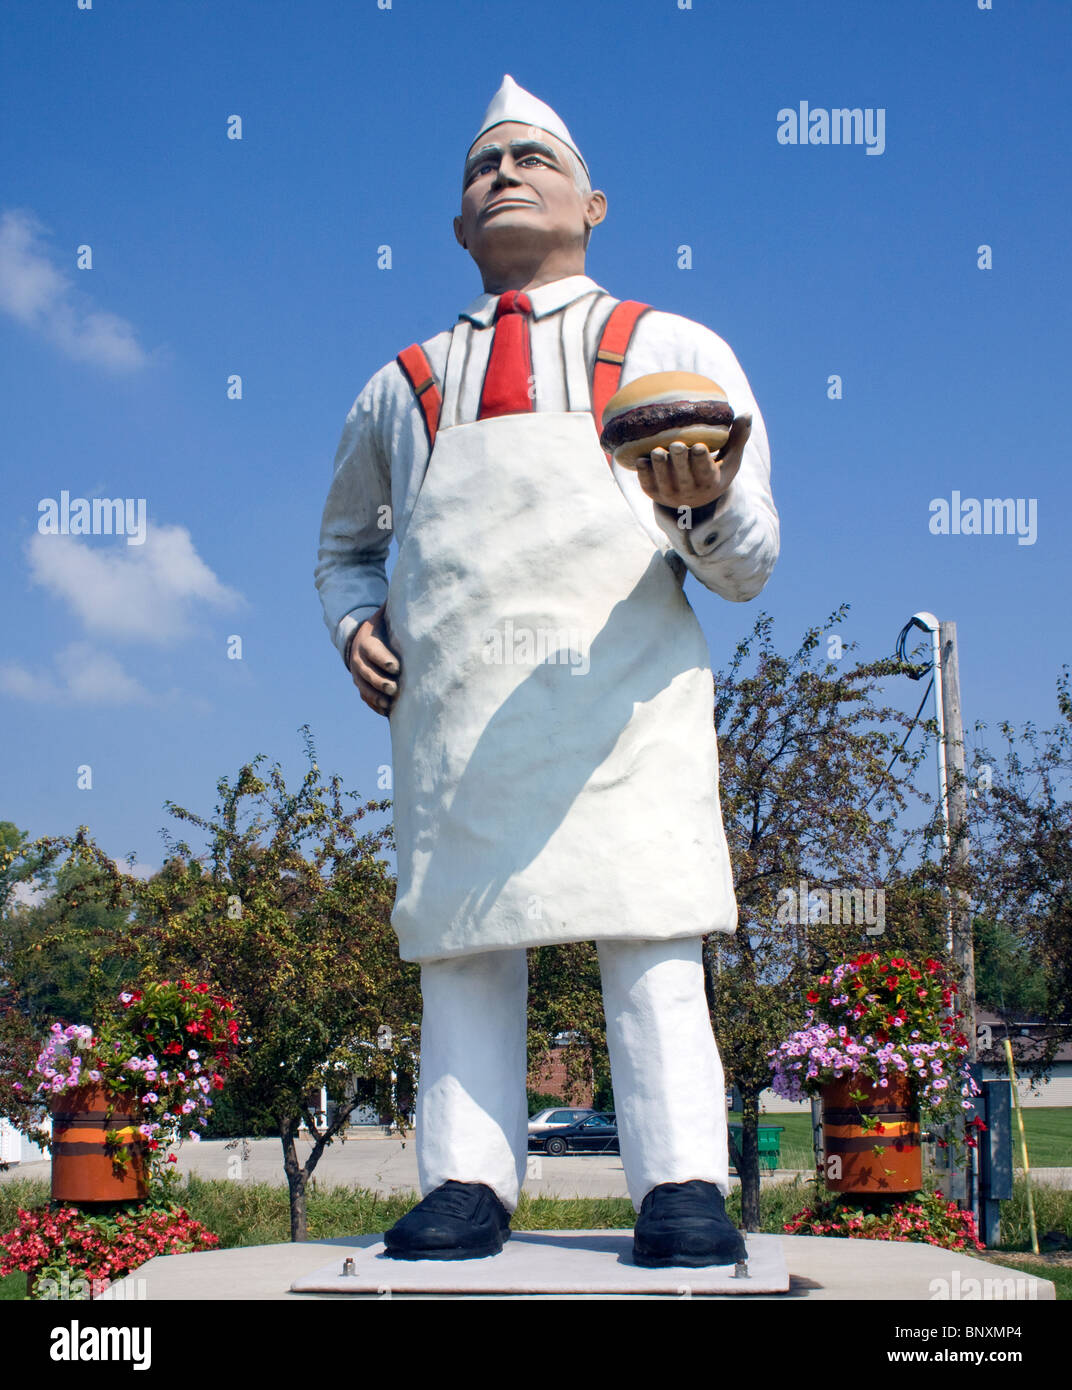 Hamburger Inventor Charlie Nagreen Statue in Seymour Wisconsin Stock Photo